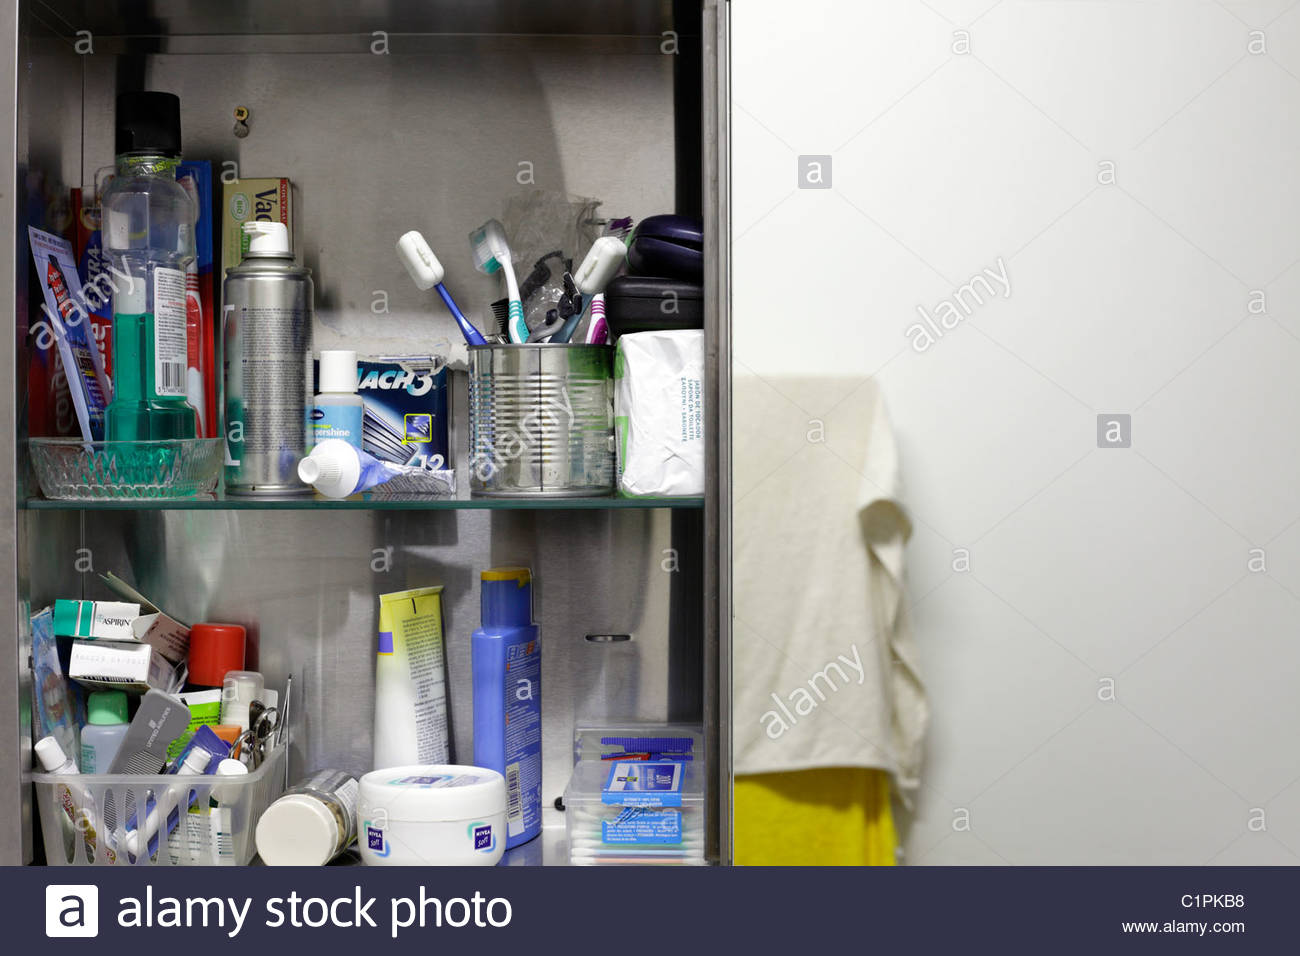 Open Medicine Cabinet With Mirror In Domestic Bathroom Stock Photo